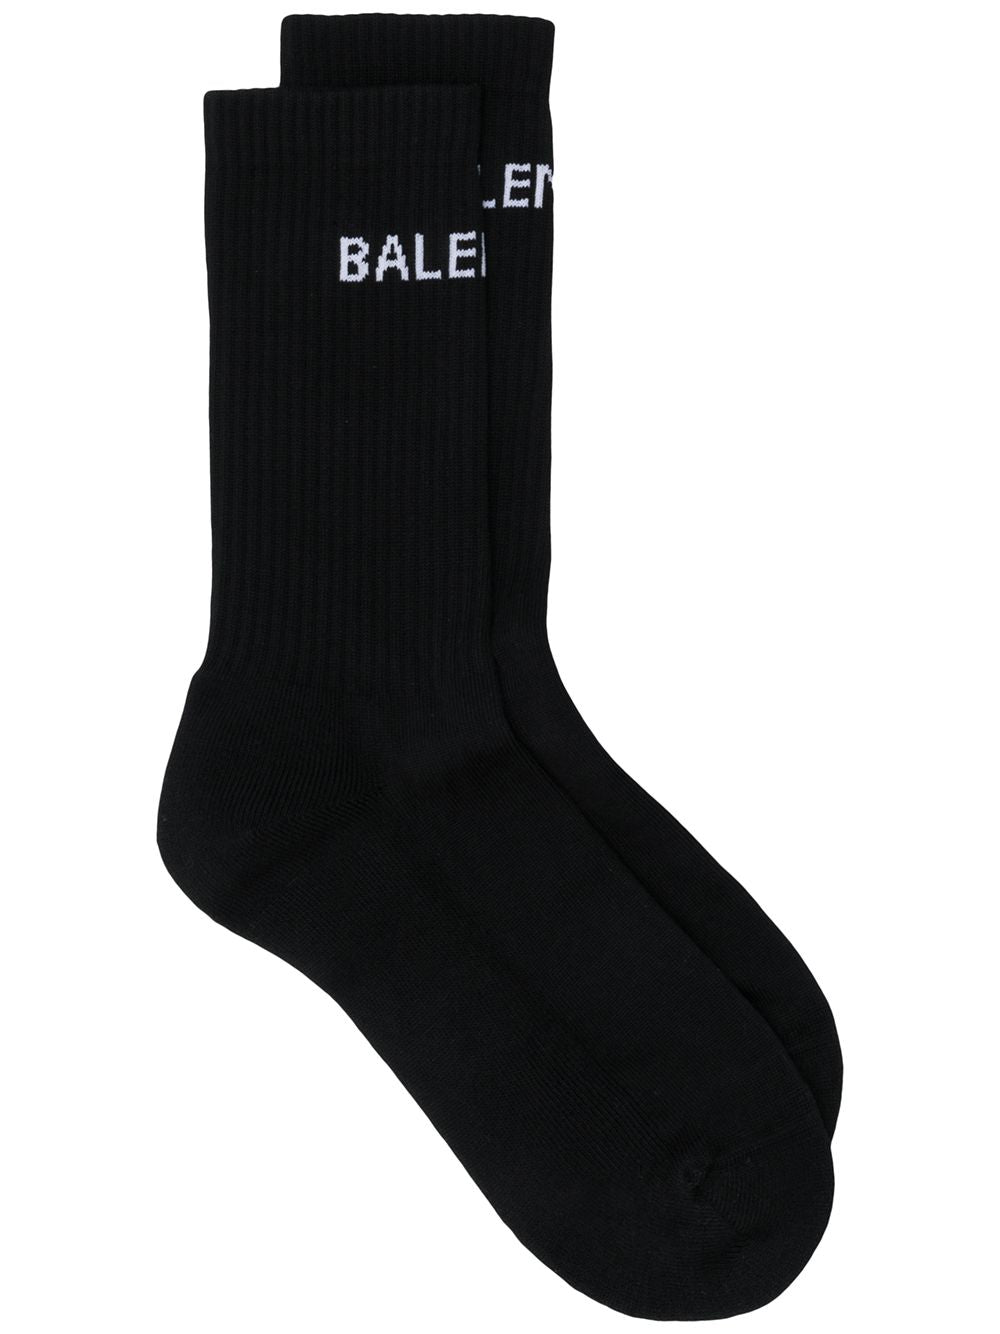 Black front logo socks